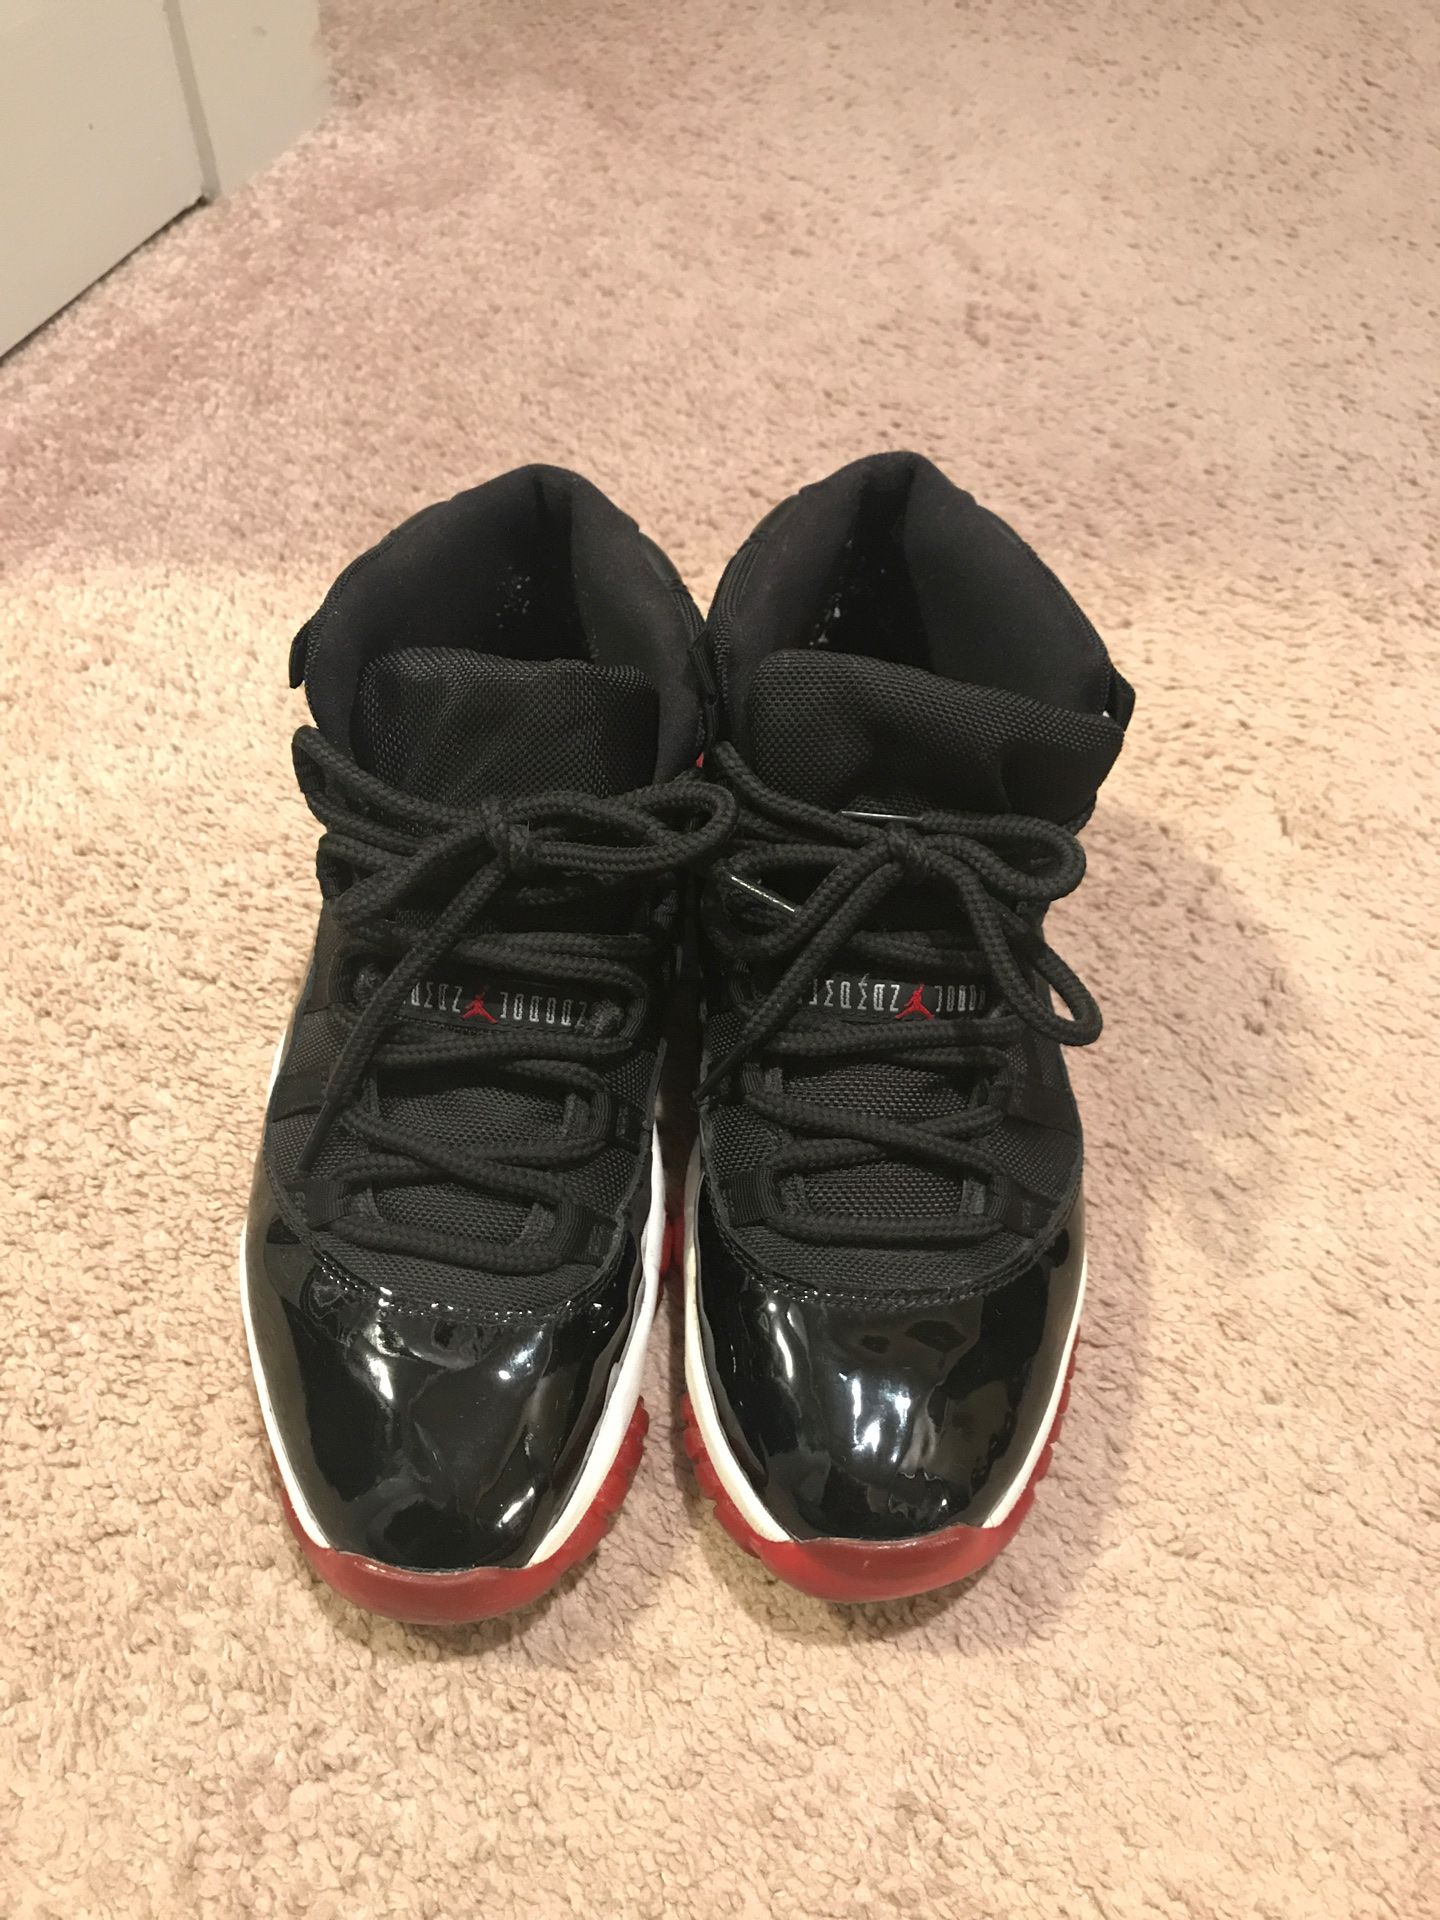 Authentic Jordan 11s retro - size 9.5